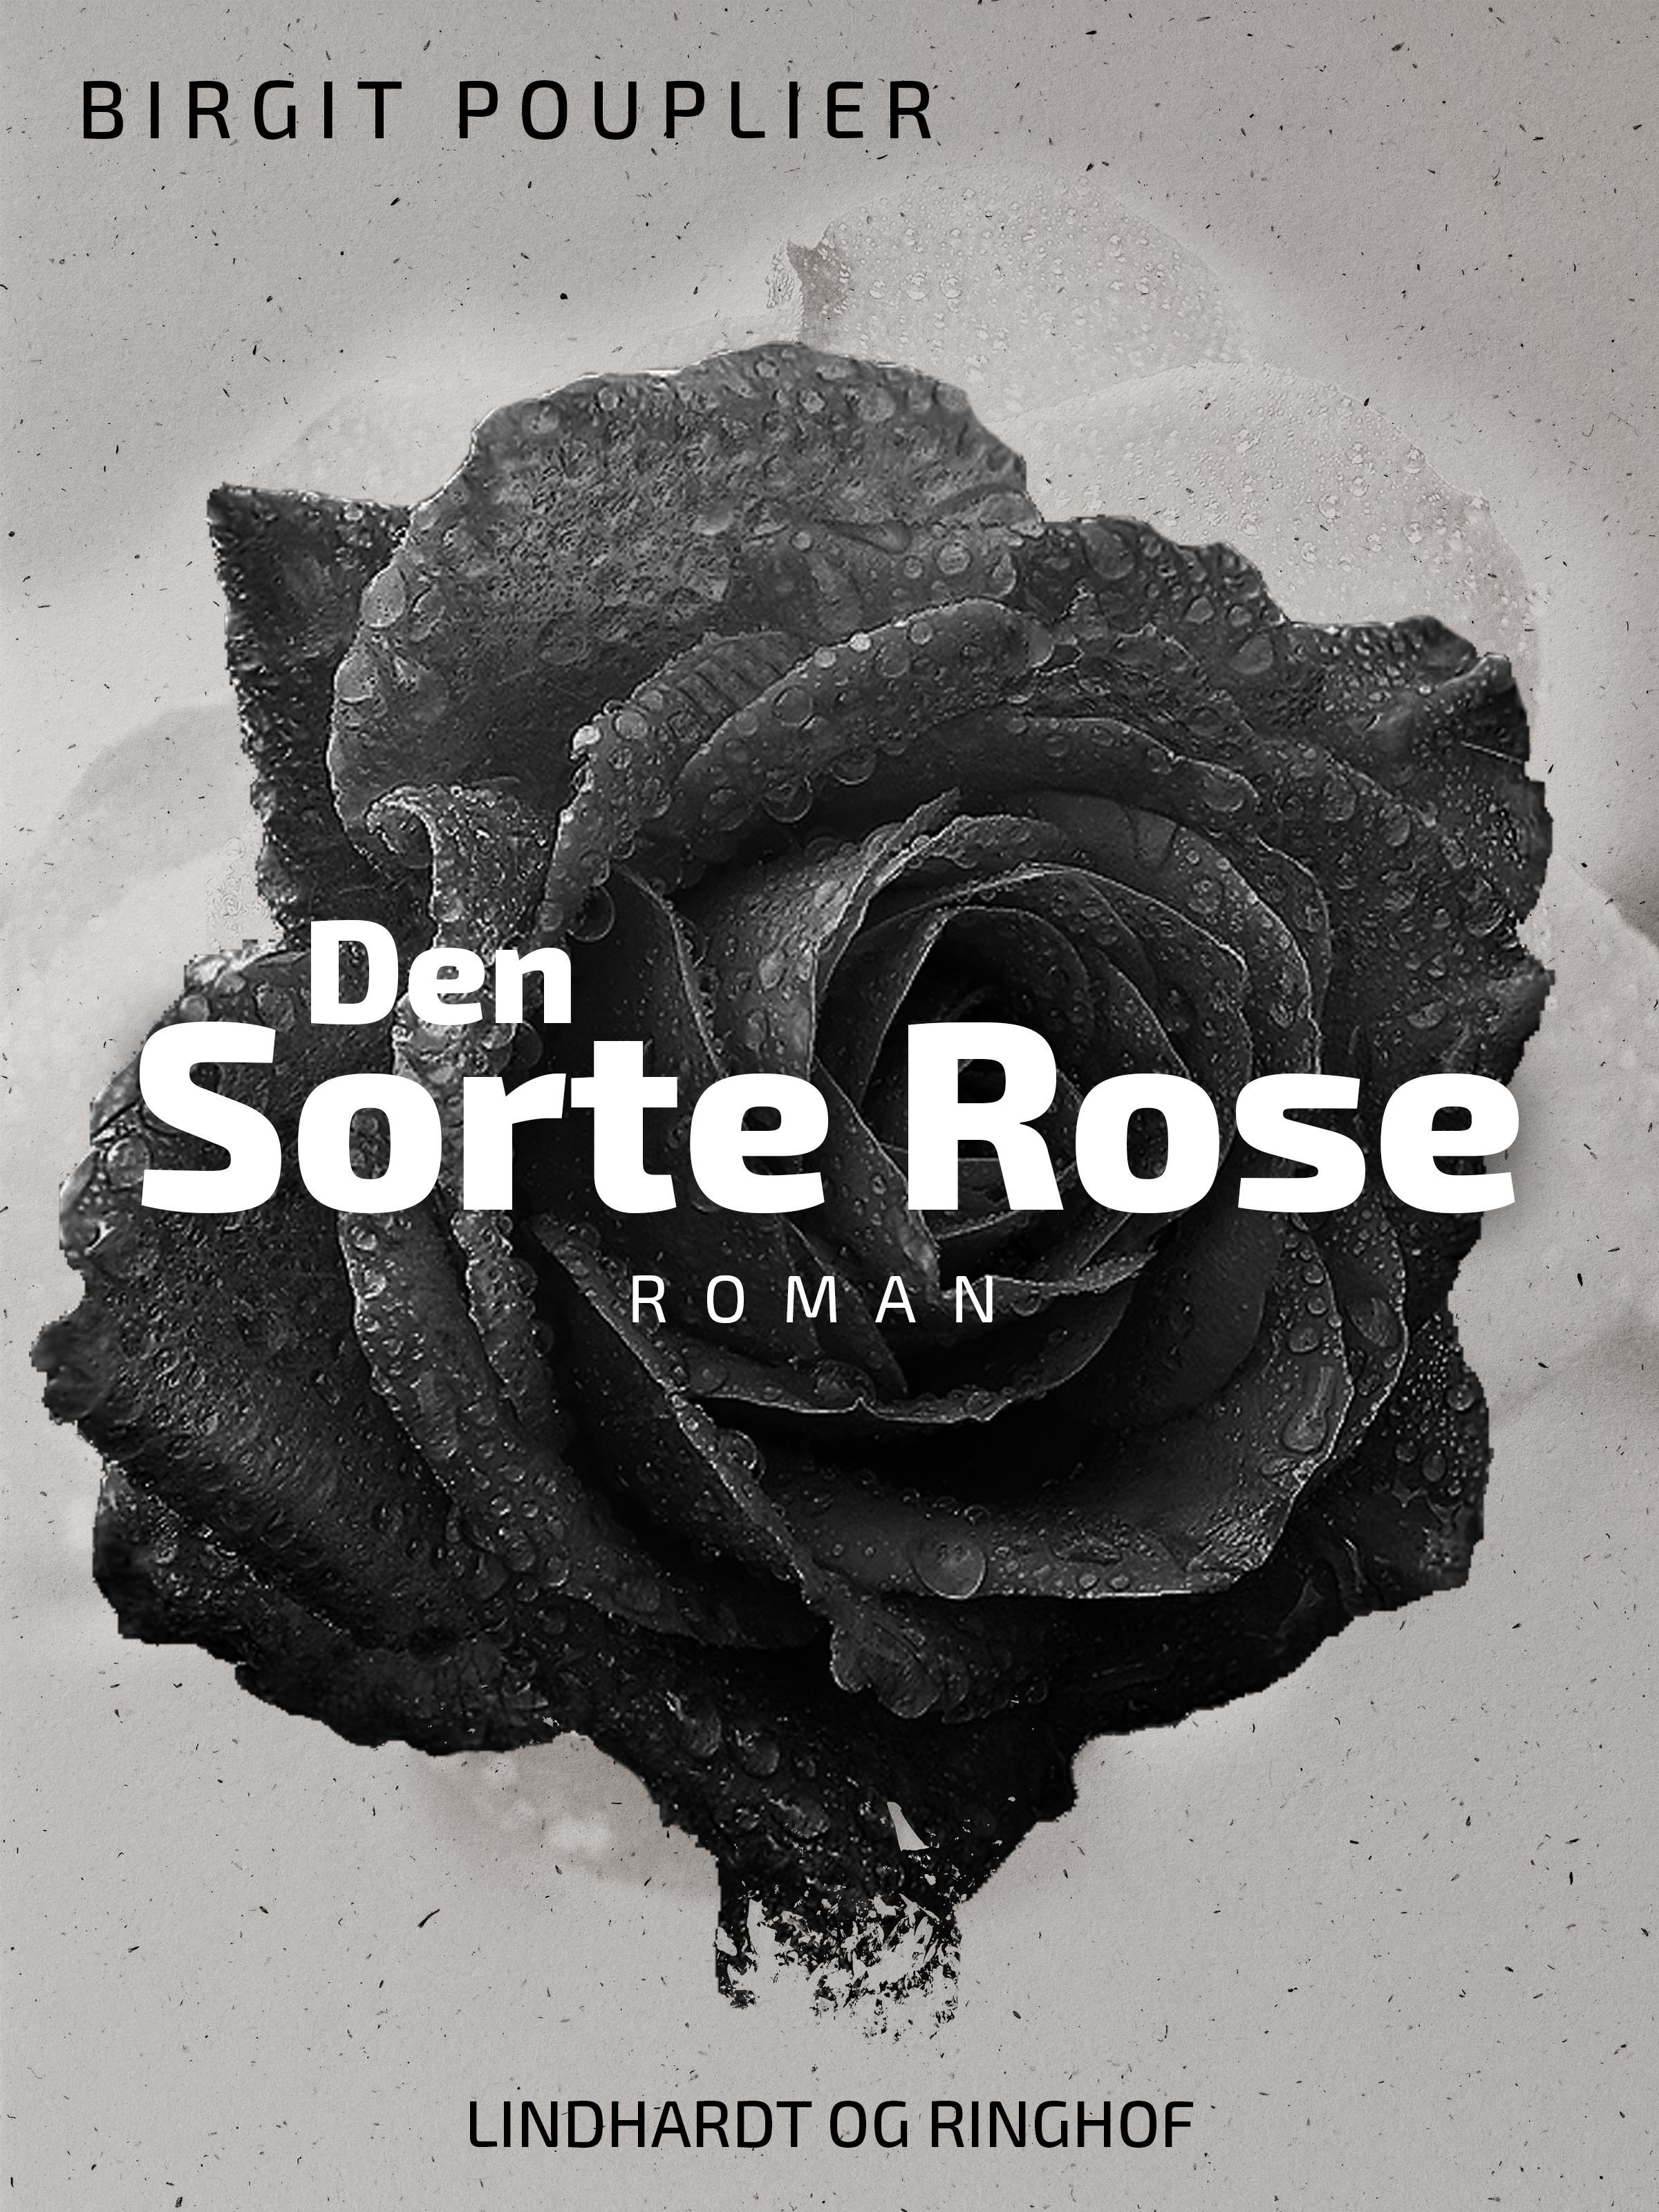 Den sorte rose, audiobook by Birgit Pouplier